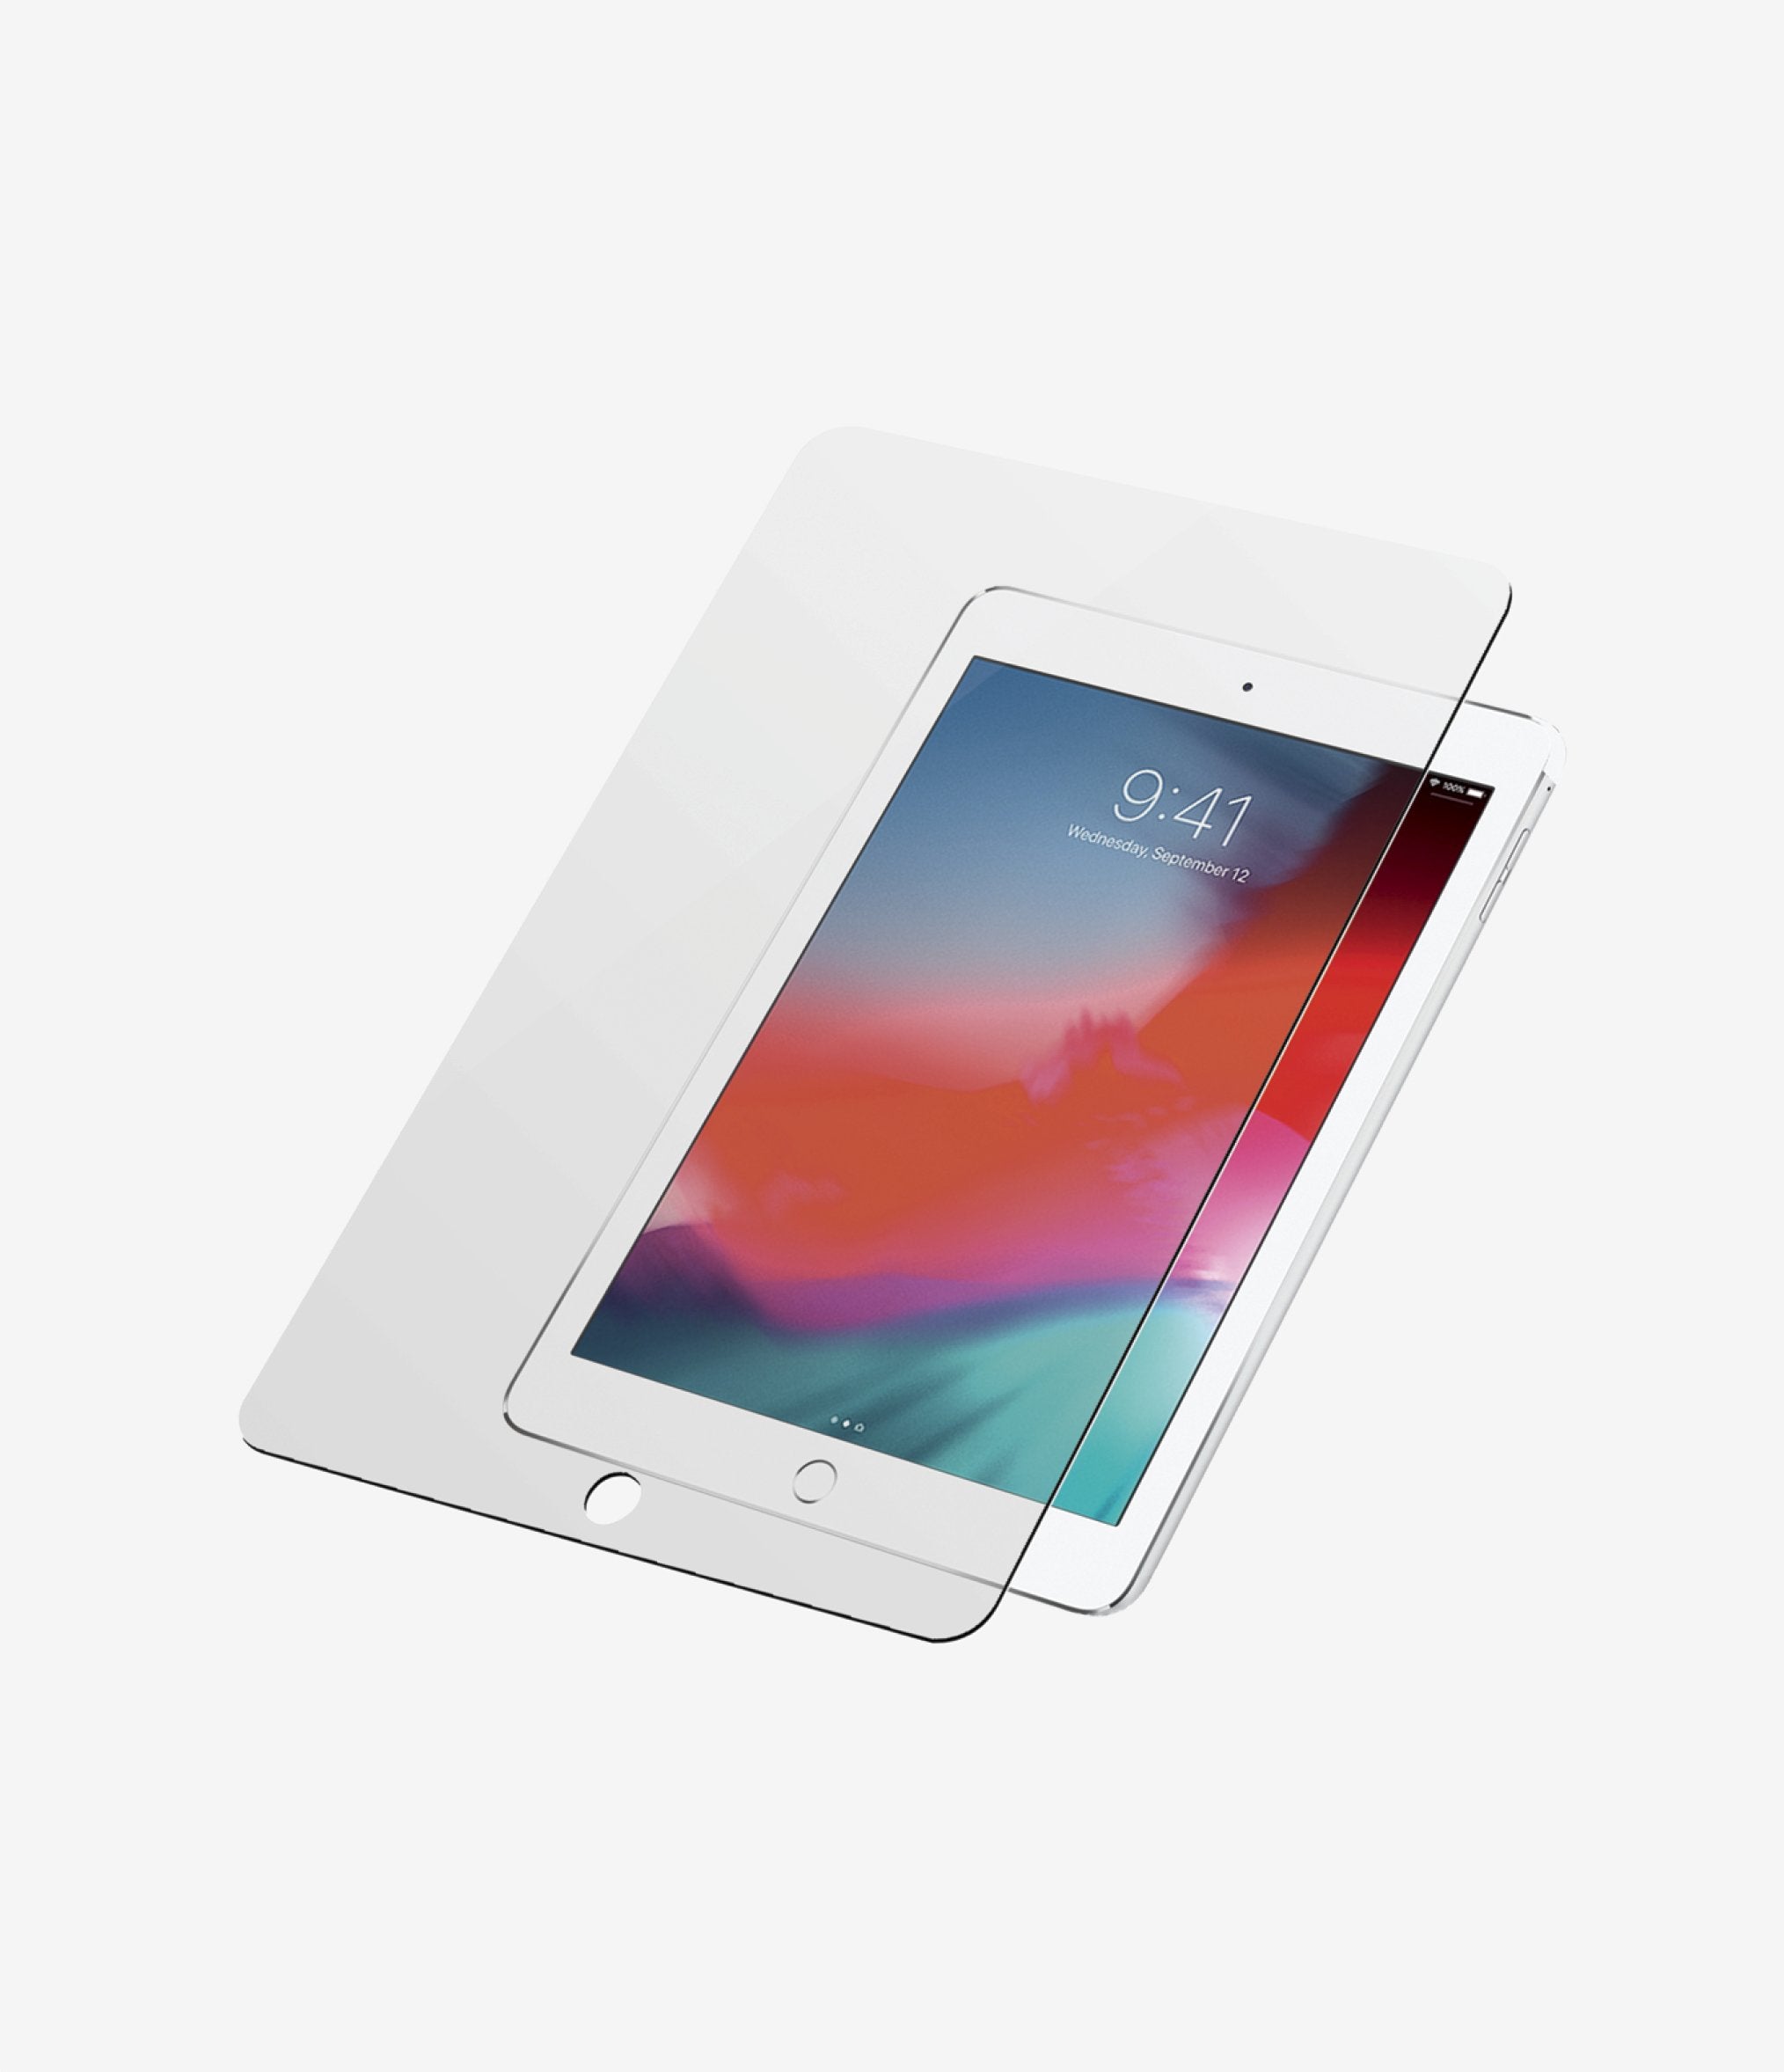 Panzerglass Tempered Glass iPad Pro 10.5/Air 2019